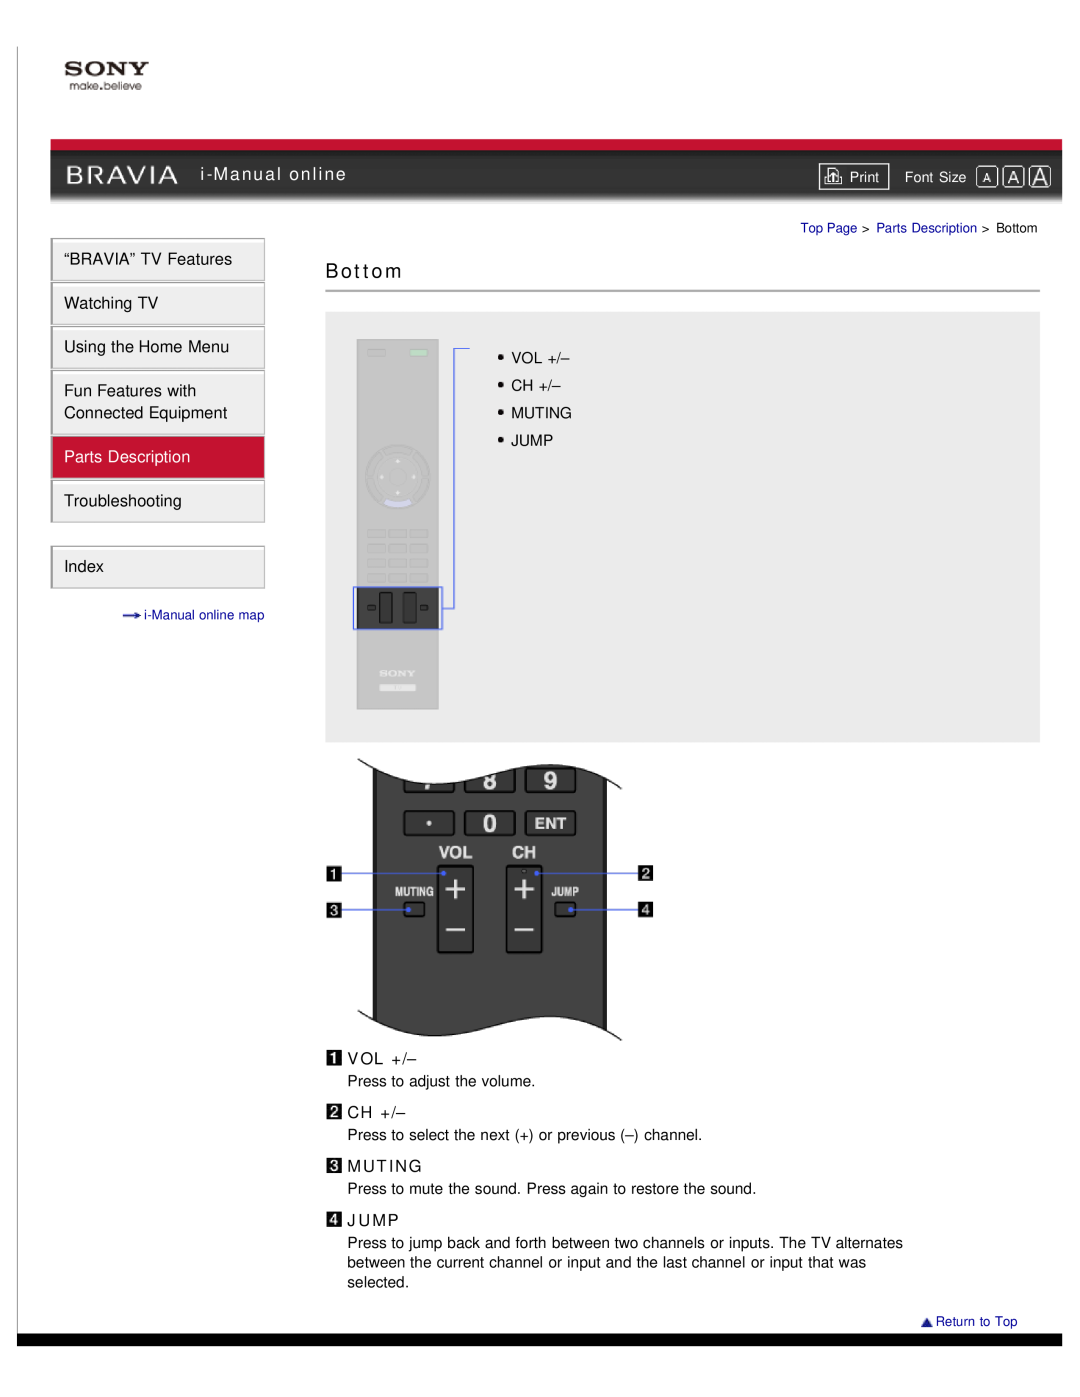 Sony NX80X manual Bottom, i-Manual online, Parts Description, Vol +, Ch +, Muting, Jump 